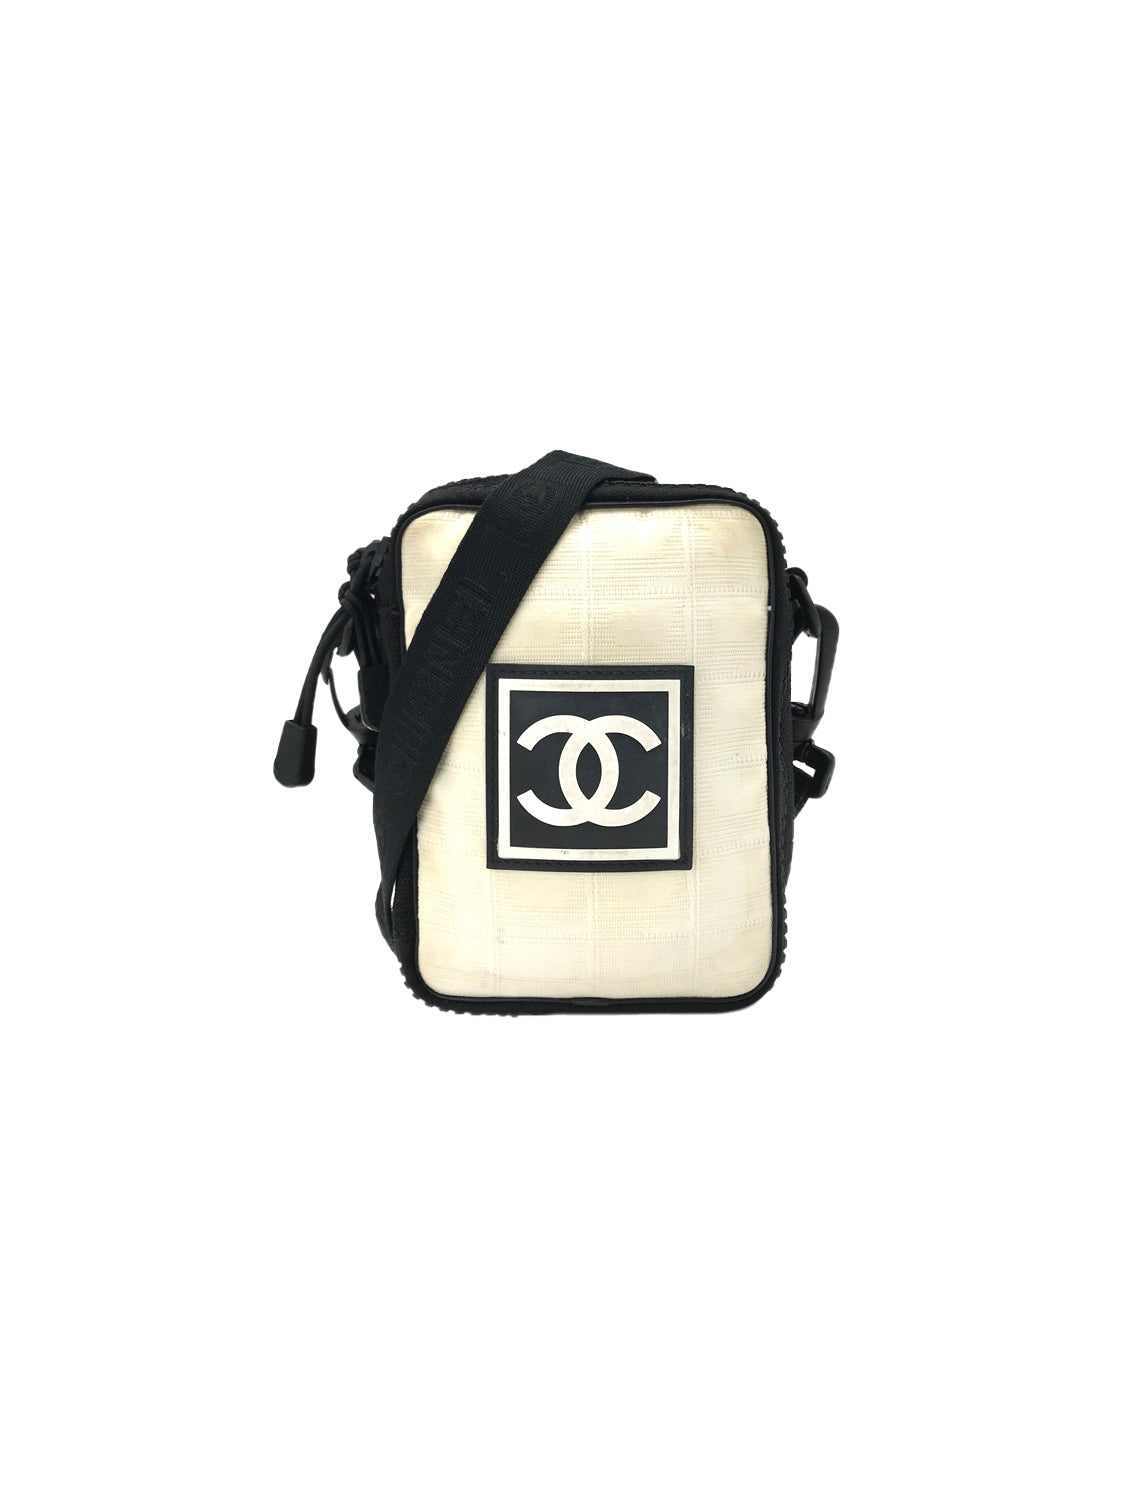 Chanel Sport Bag